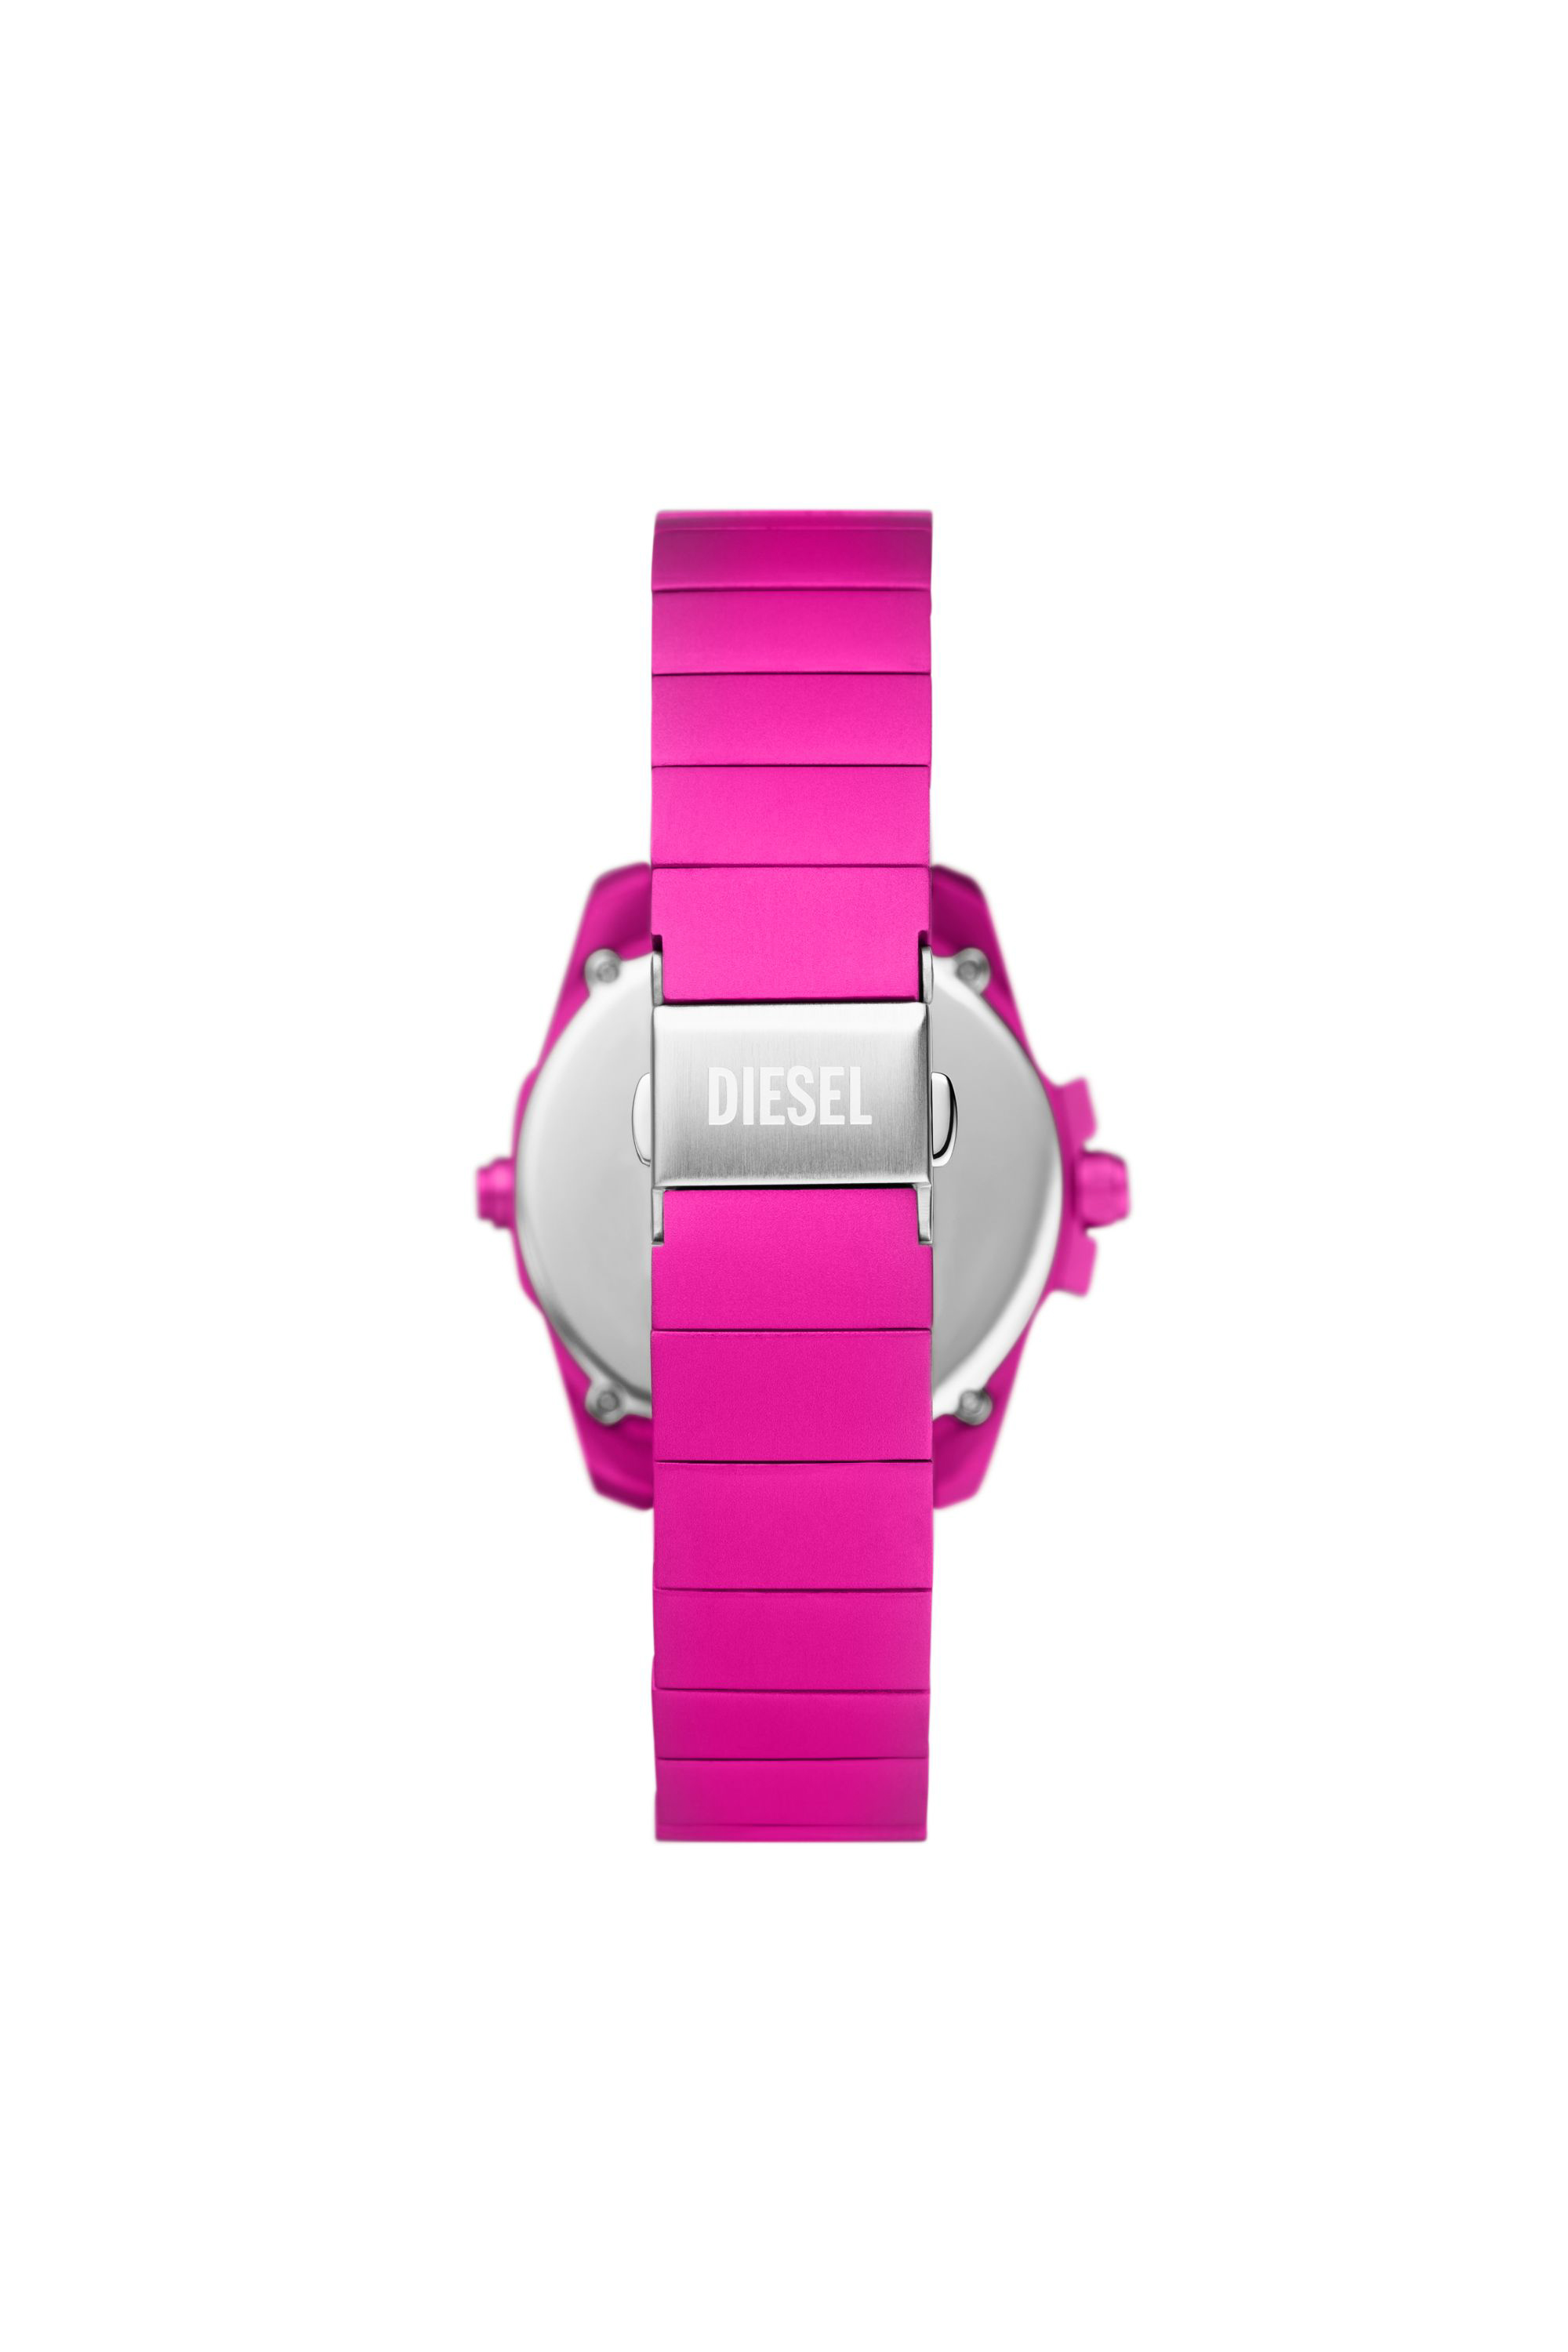 Diesel - DZ2206 WATCH, Male Baby chief digital pink aluminum watch in ピンク - Image 2